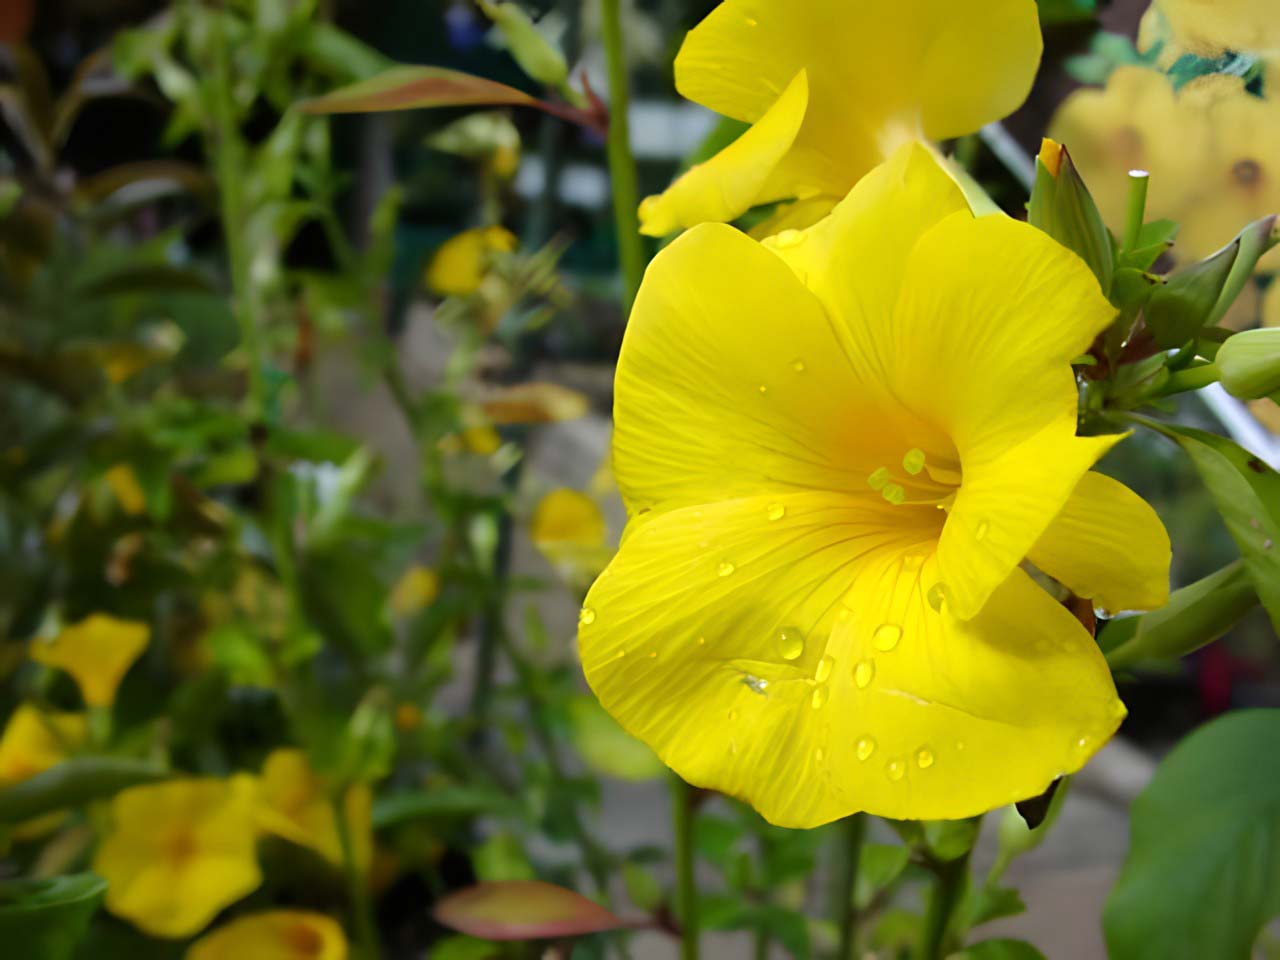 Reinwardtia indica - yellow trumpet shaped flowers